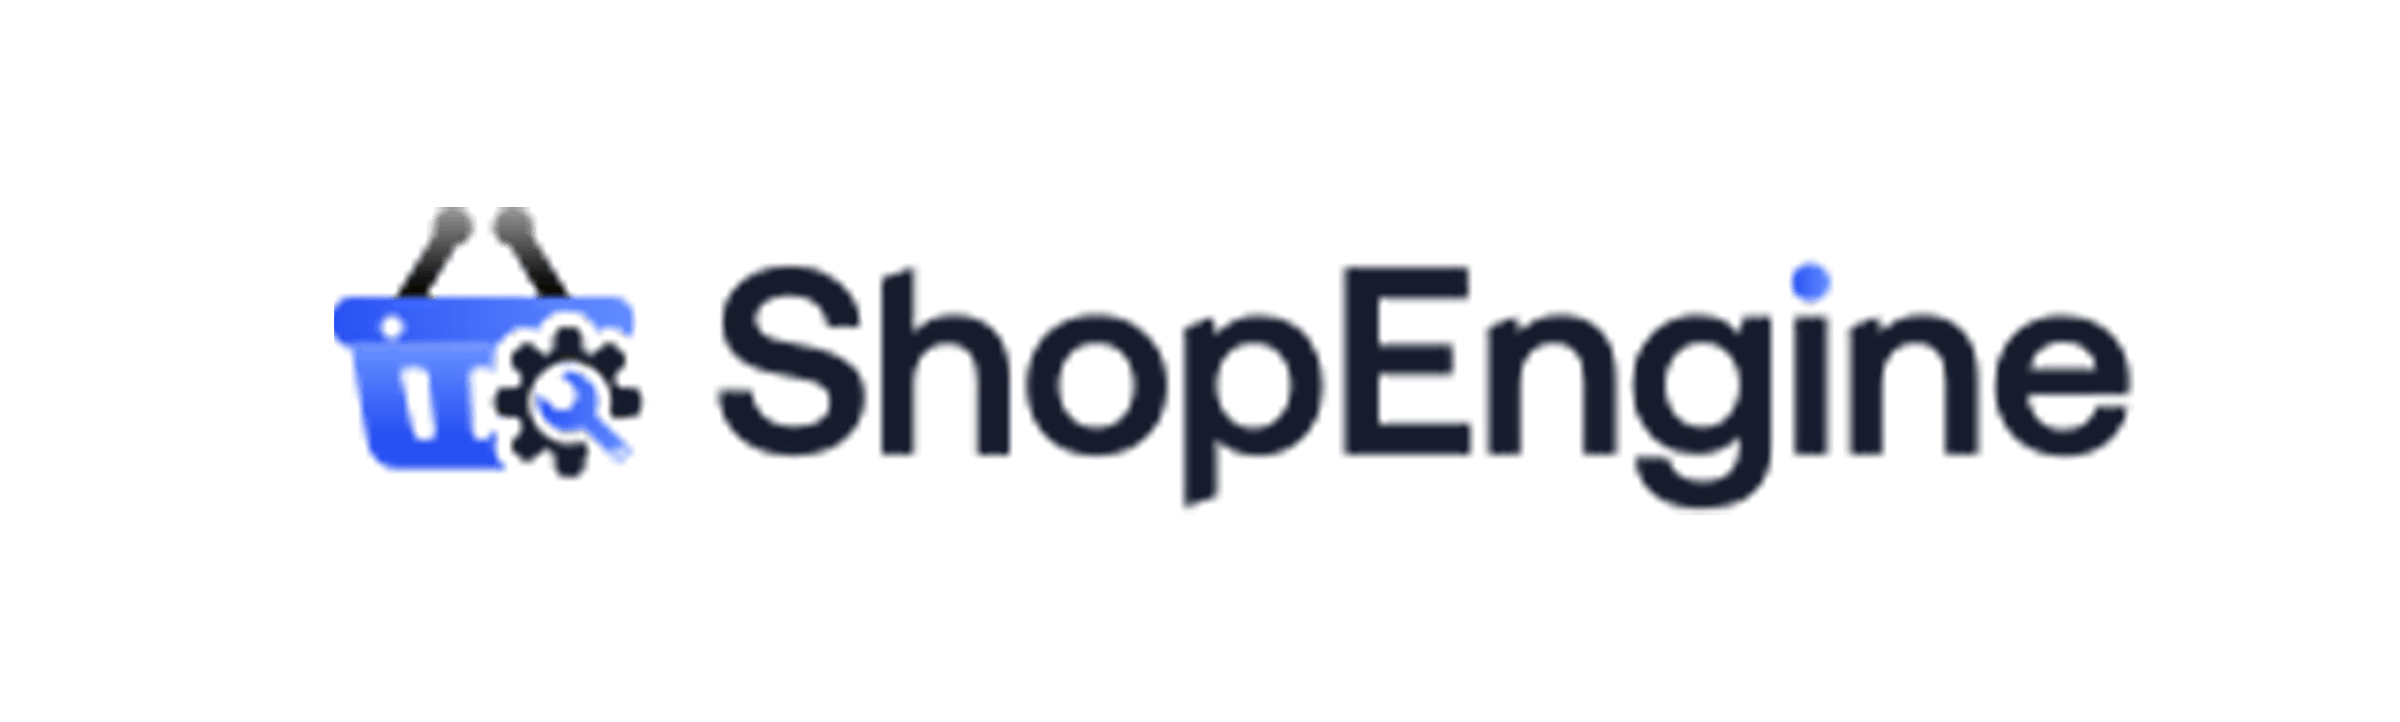 ShopEngine logo